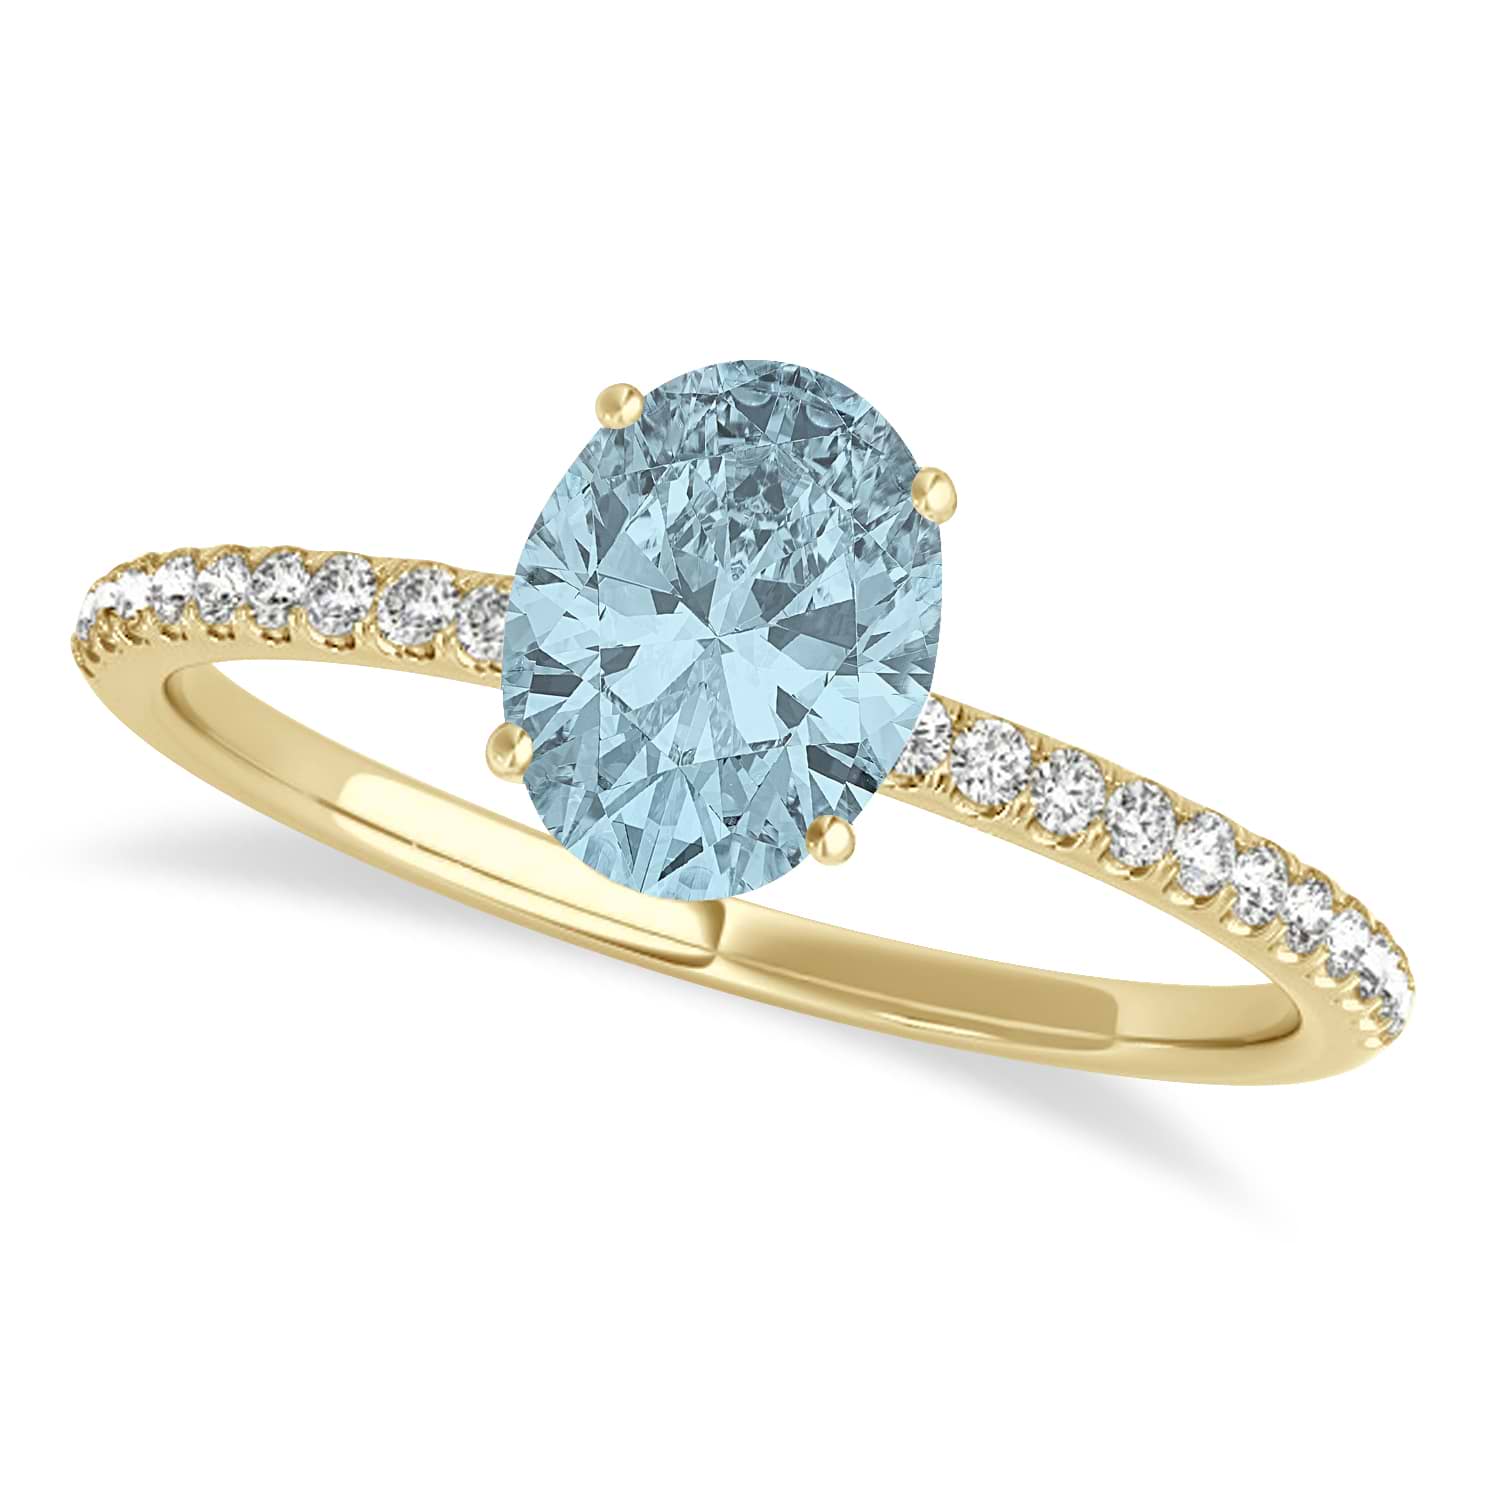 Aquamarine & Diamond Accented Oval Shape Engagement Ring 14k Yellow Gold (2.50ct)